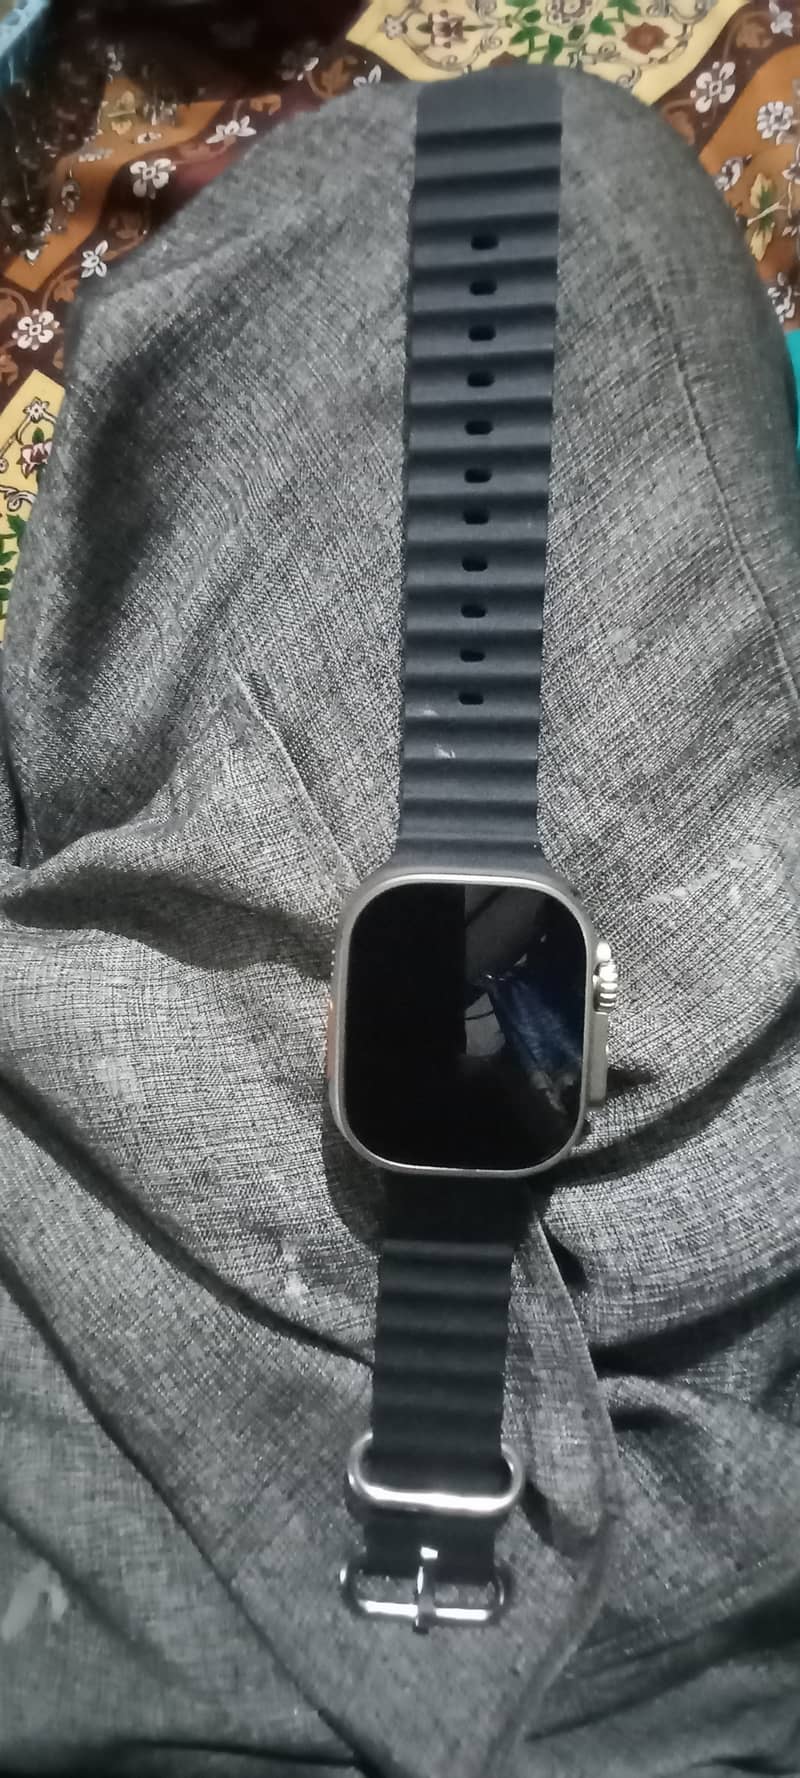 apple watch A8 modal dubai import just box open 3